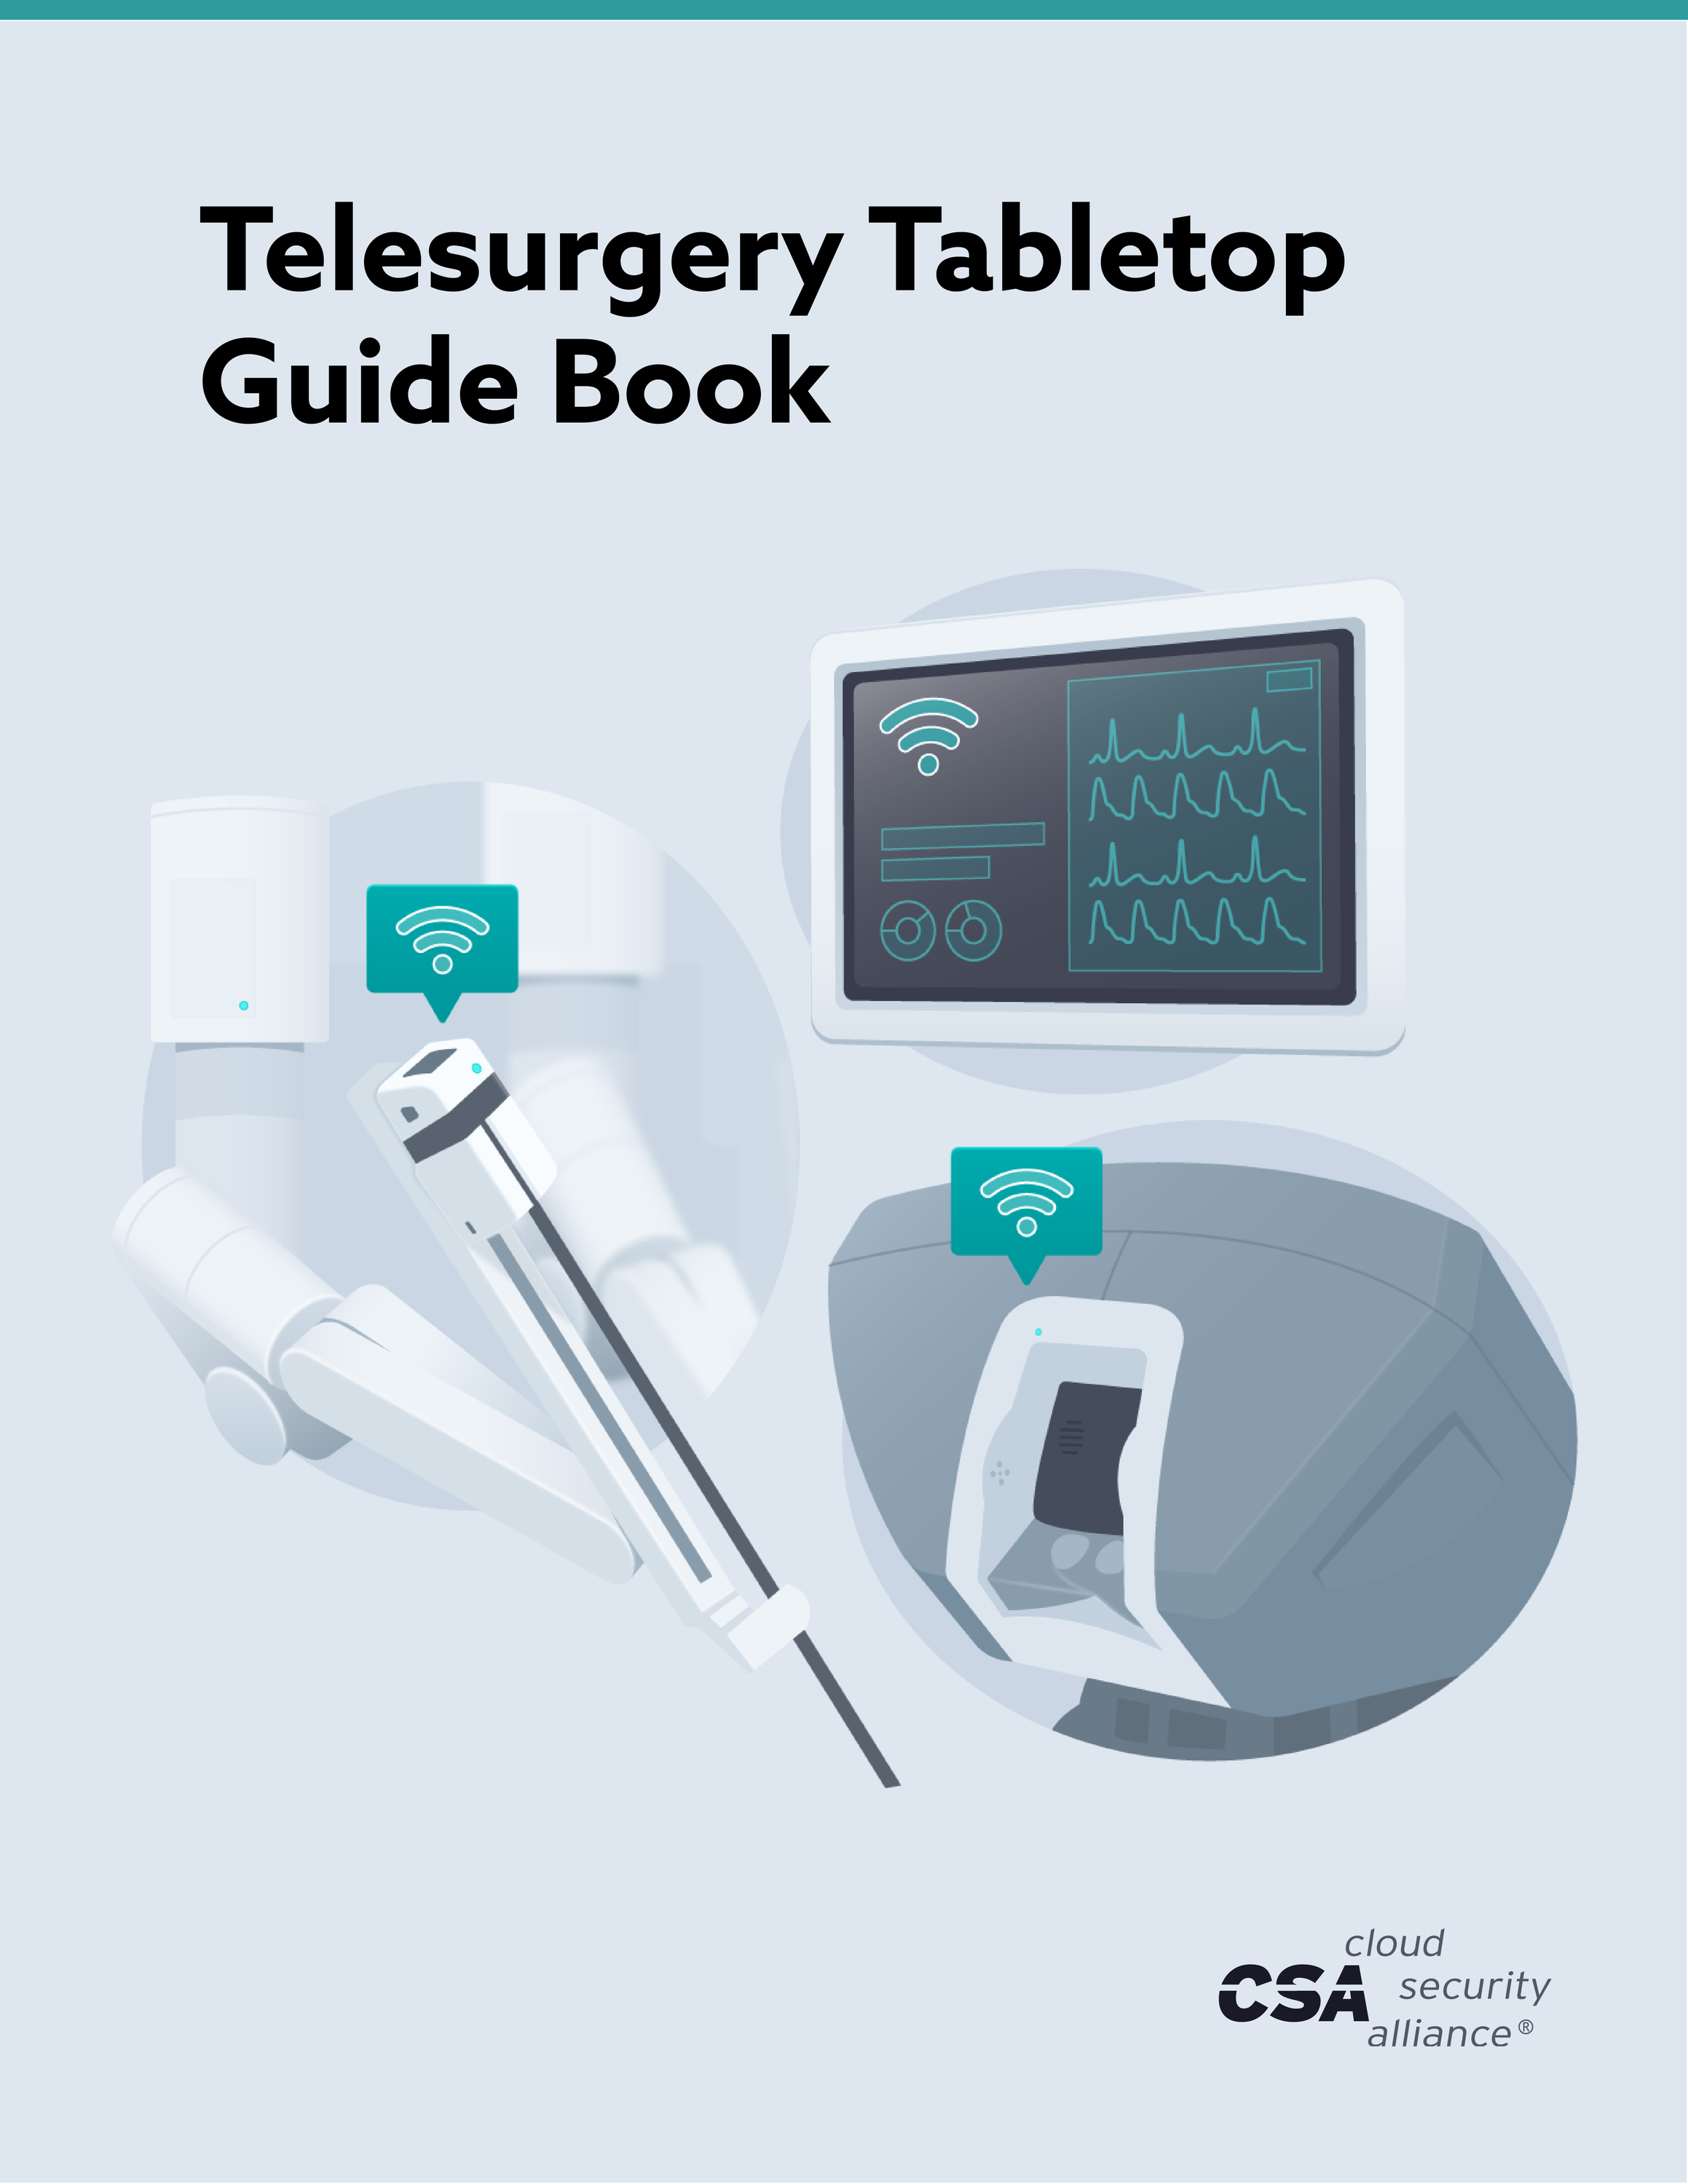 Telesurgery Tabletop Guide Book